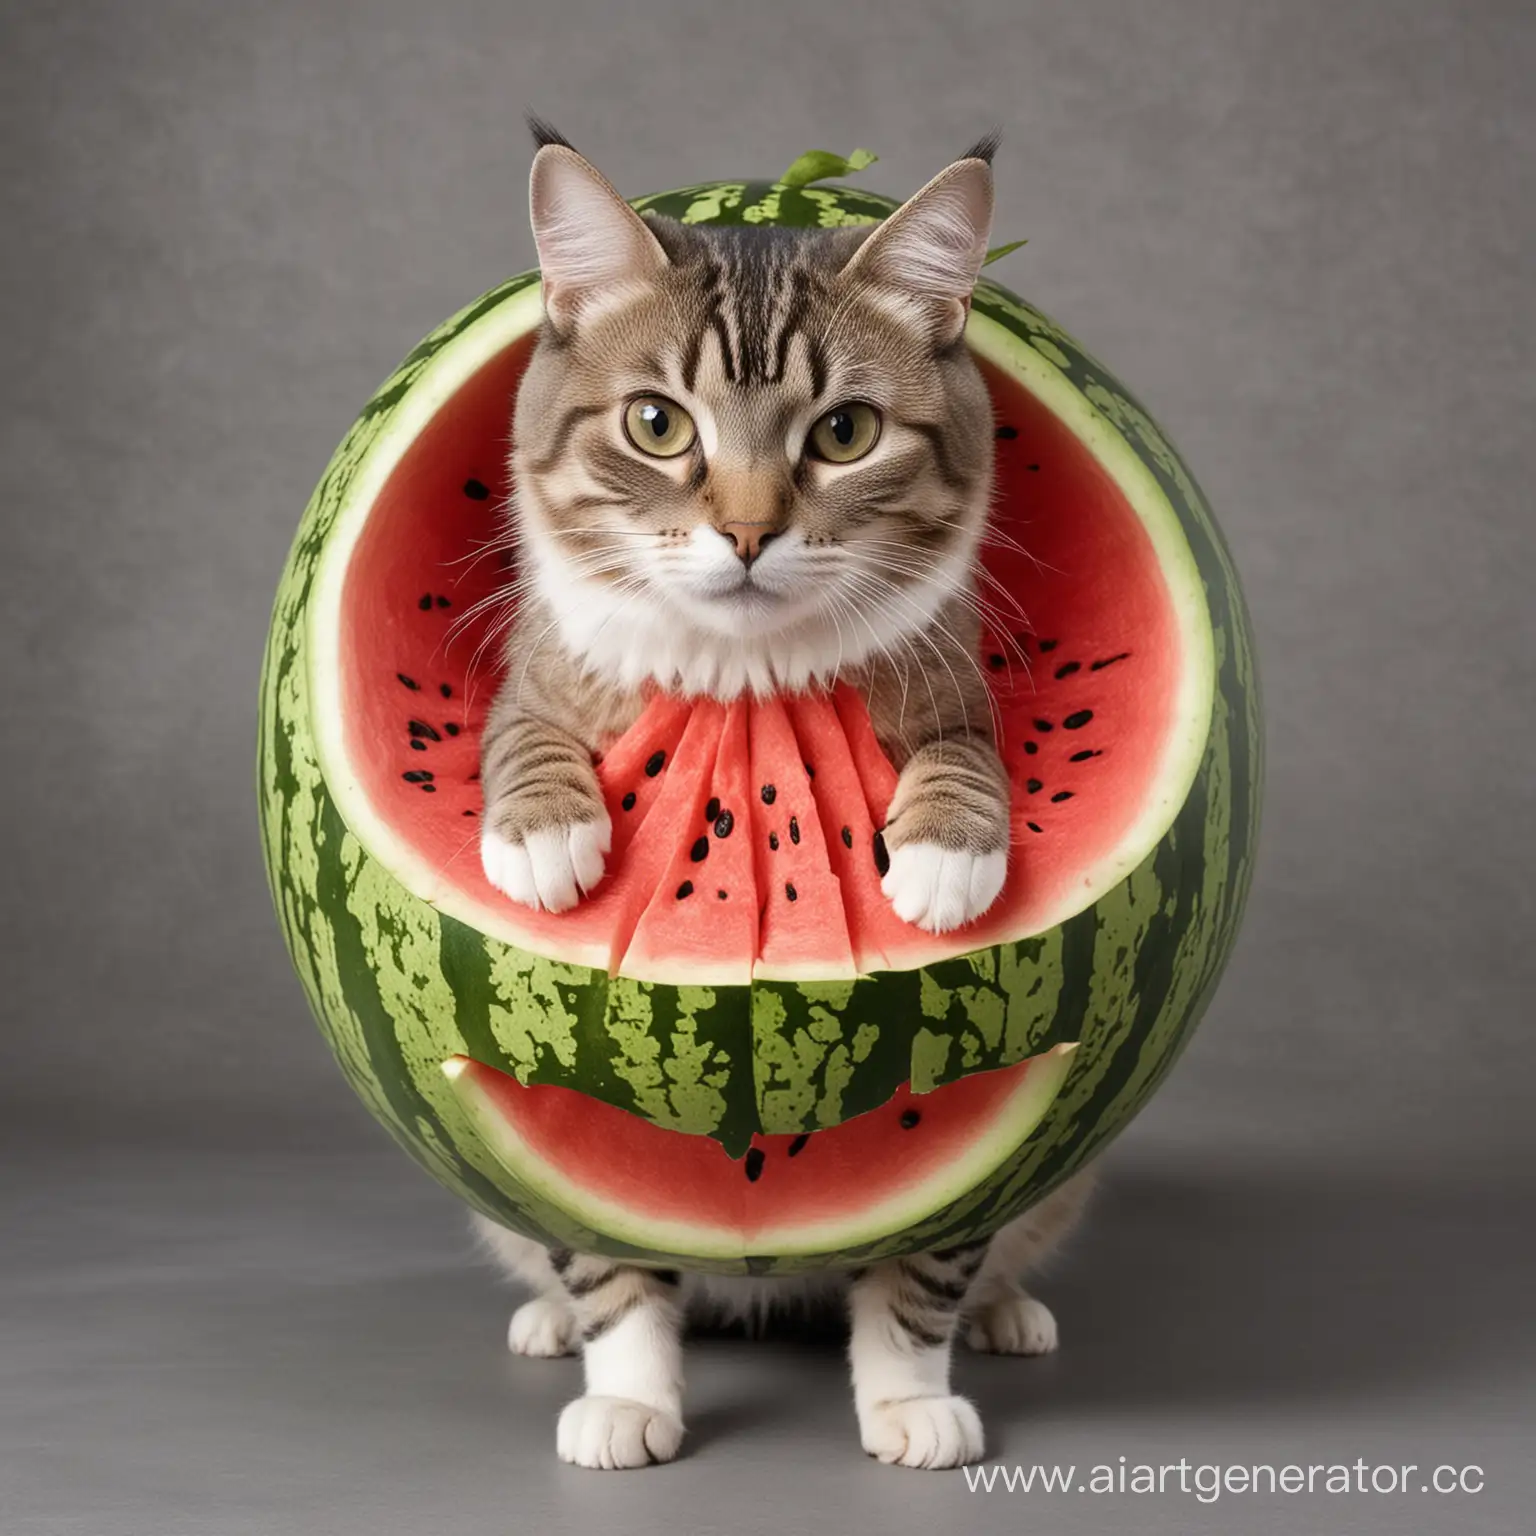 FelineThemed-Watermelon-Party